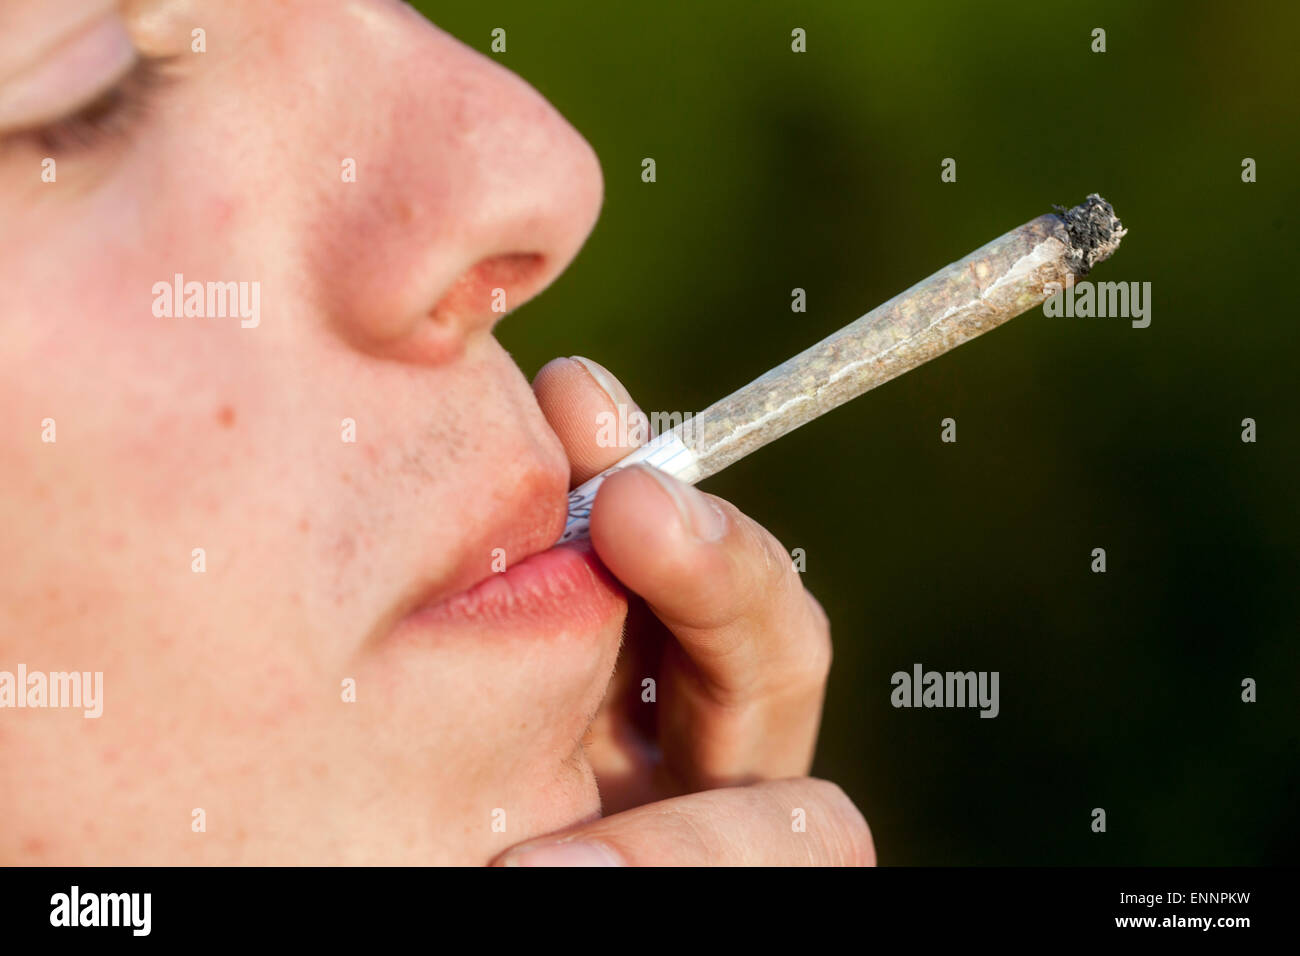 Close up Teenager smoking marijuana joint Young man Smoking joint Man Smoking marijuana cigarette Joint Male Teenage Boy inhaling Cannabis joint Face Stock Photo